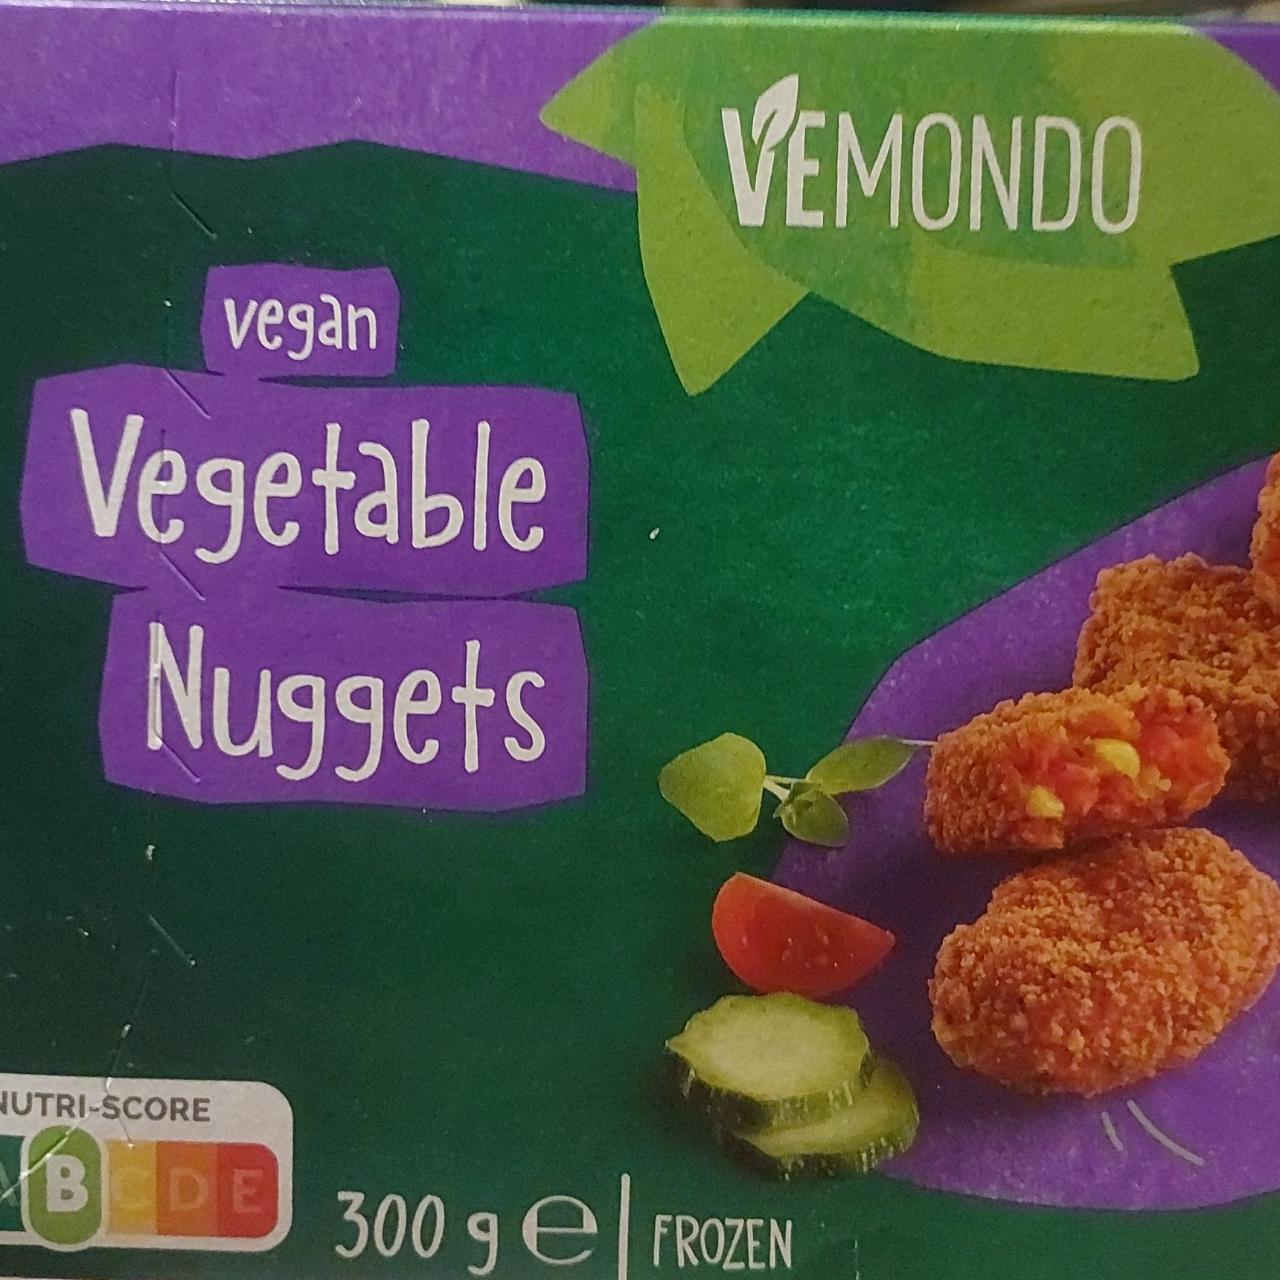 Zdjęcia - Vegan vegetable nuggets Vemondo